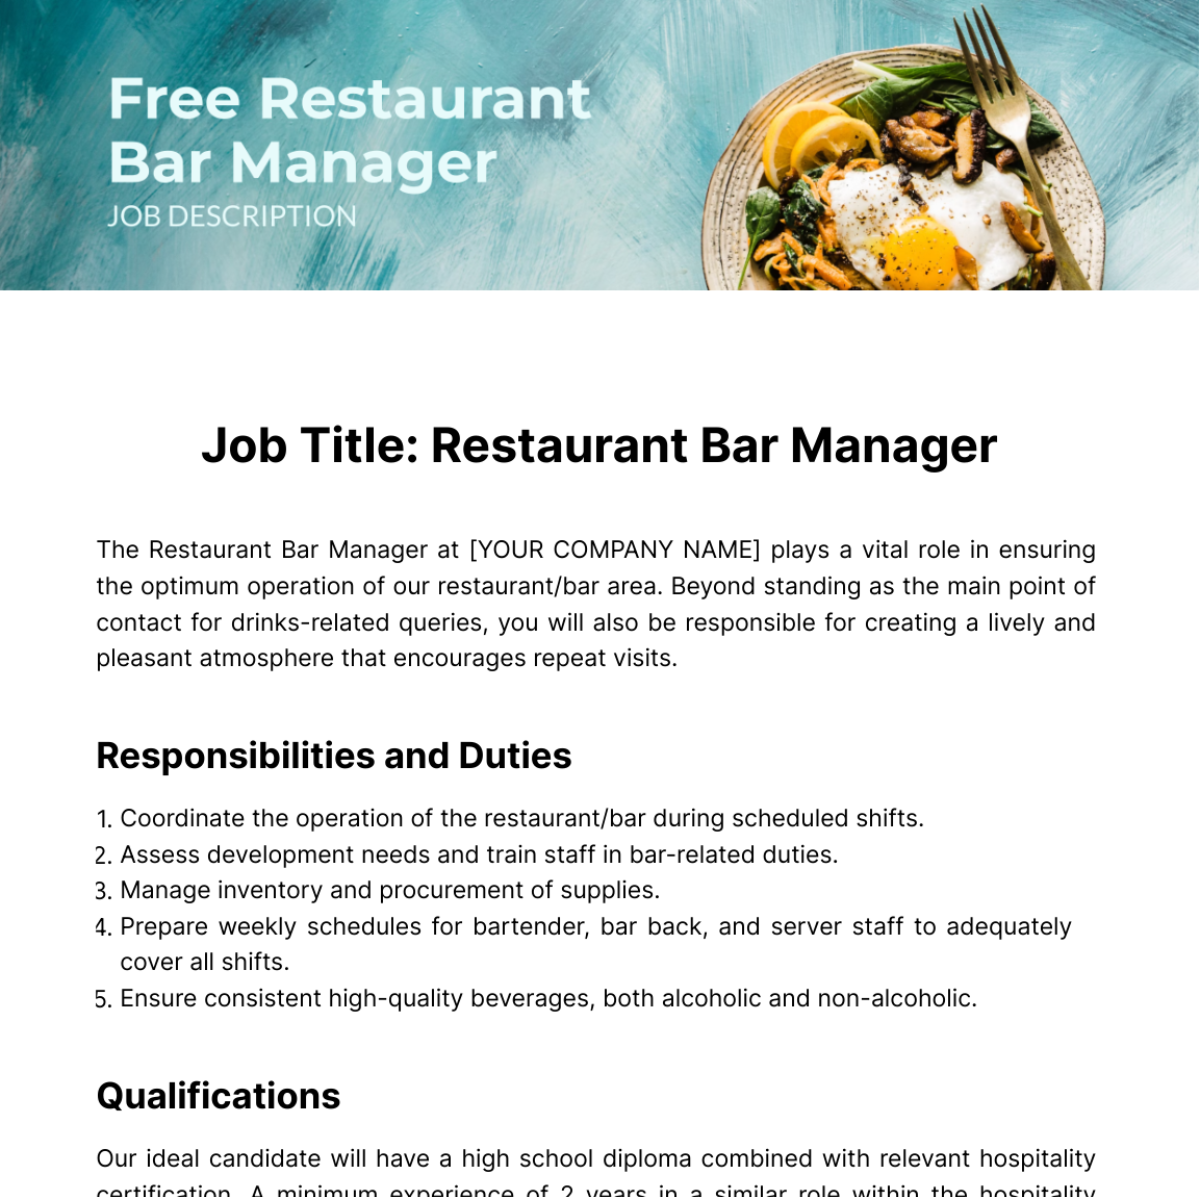 Free Restaurant Bar Manager Job Description Template